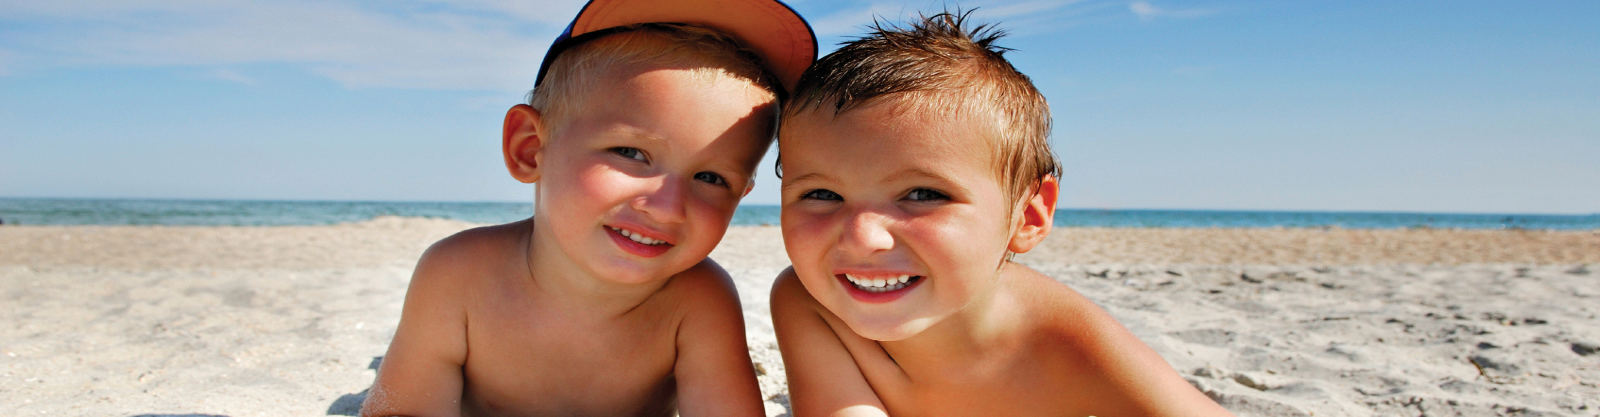 beach-boys-summer-holidays-fun-riviera-family-hotel-bournemouth